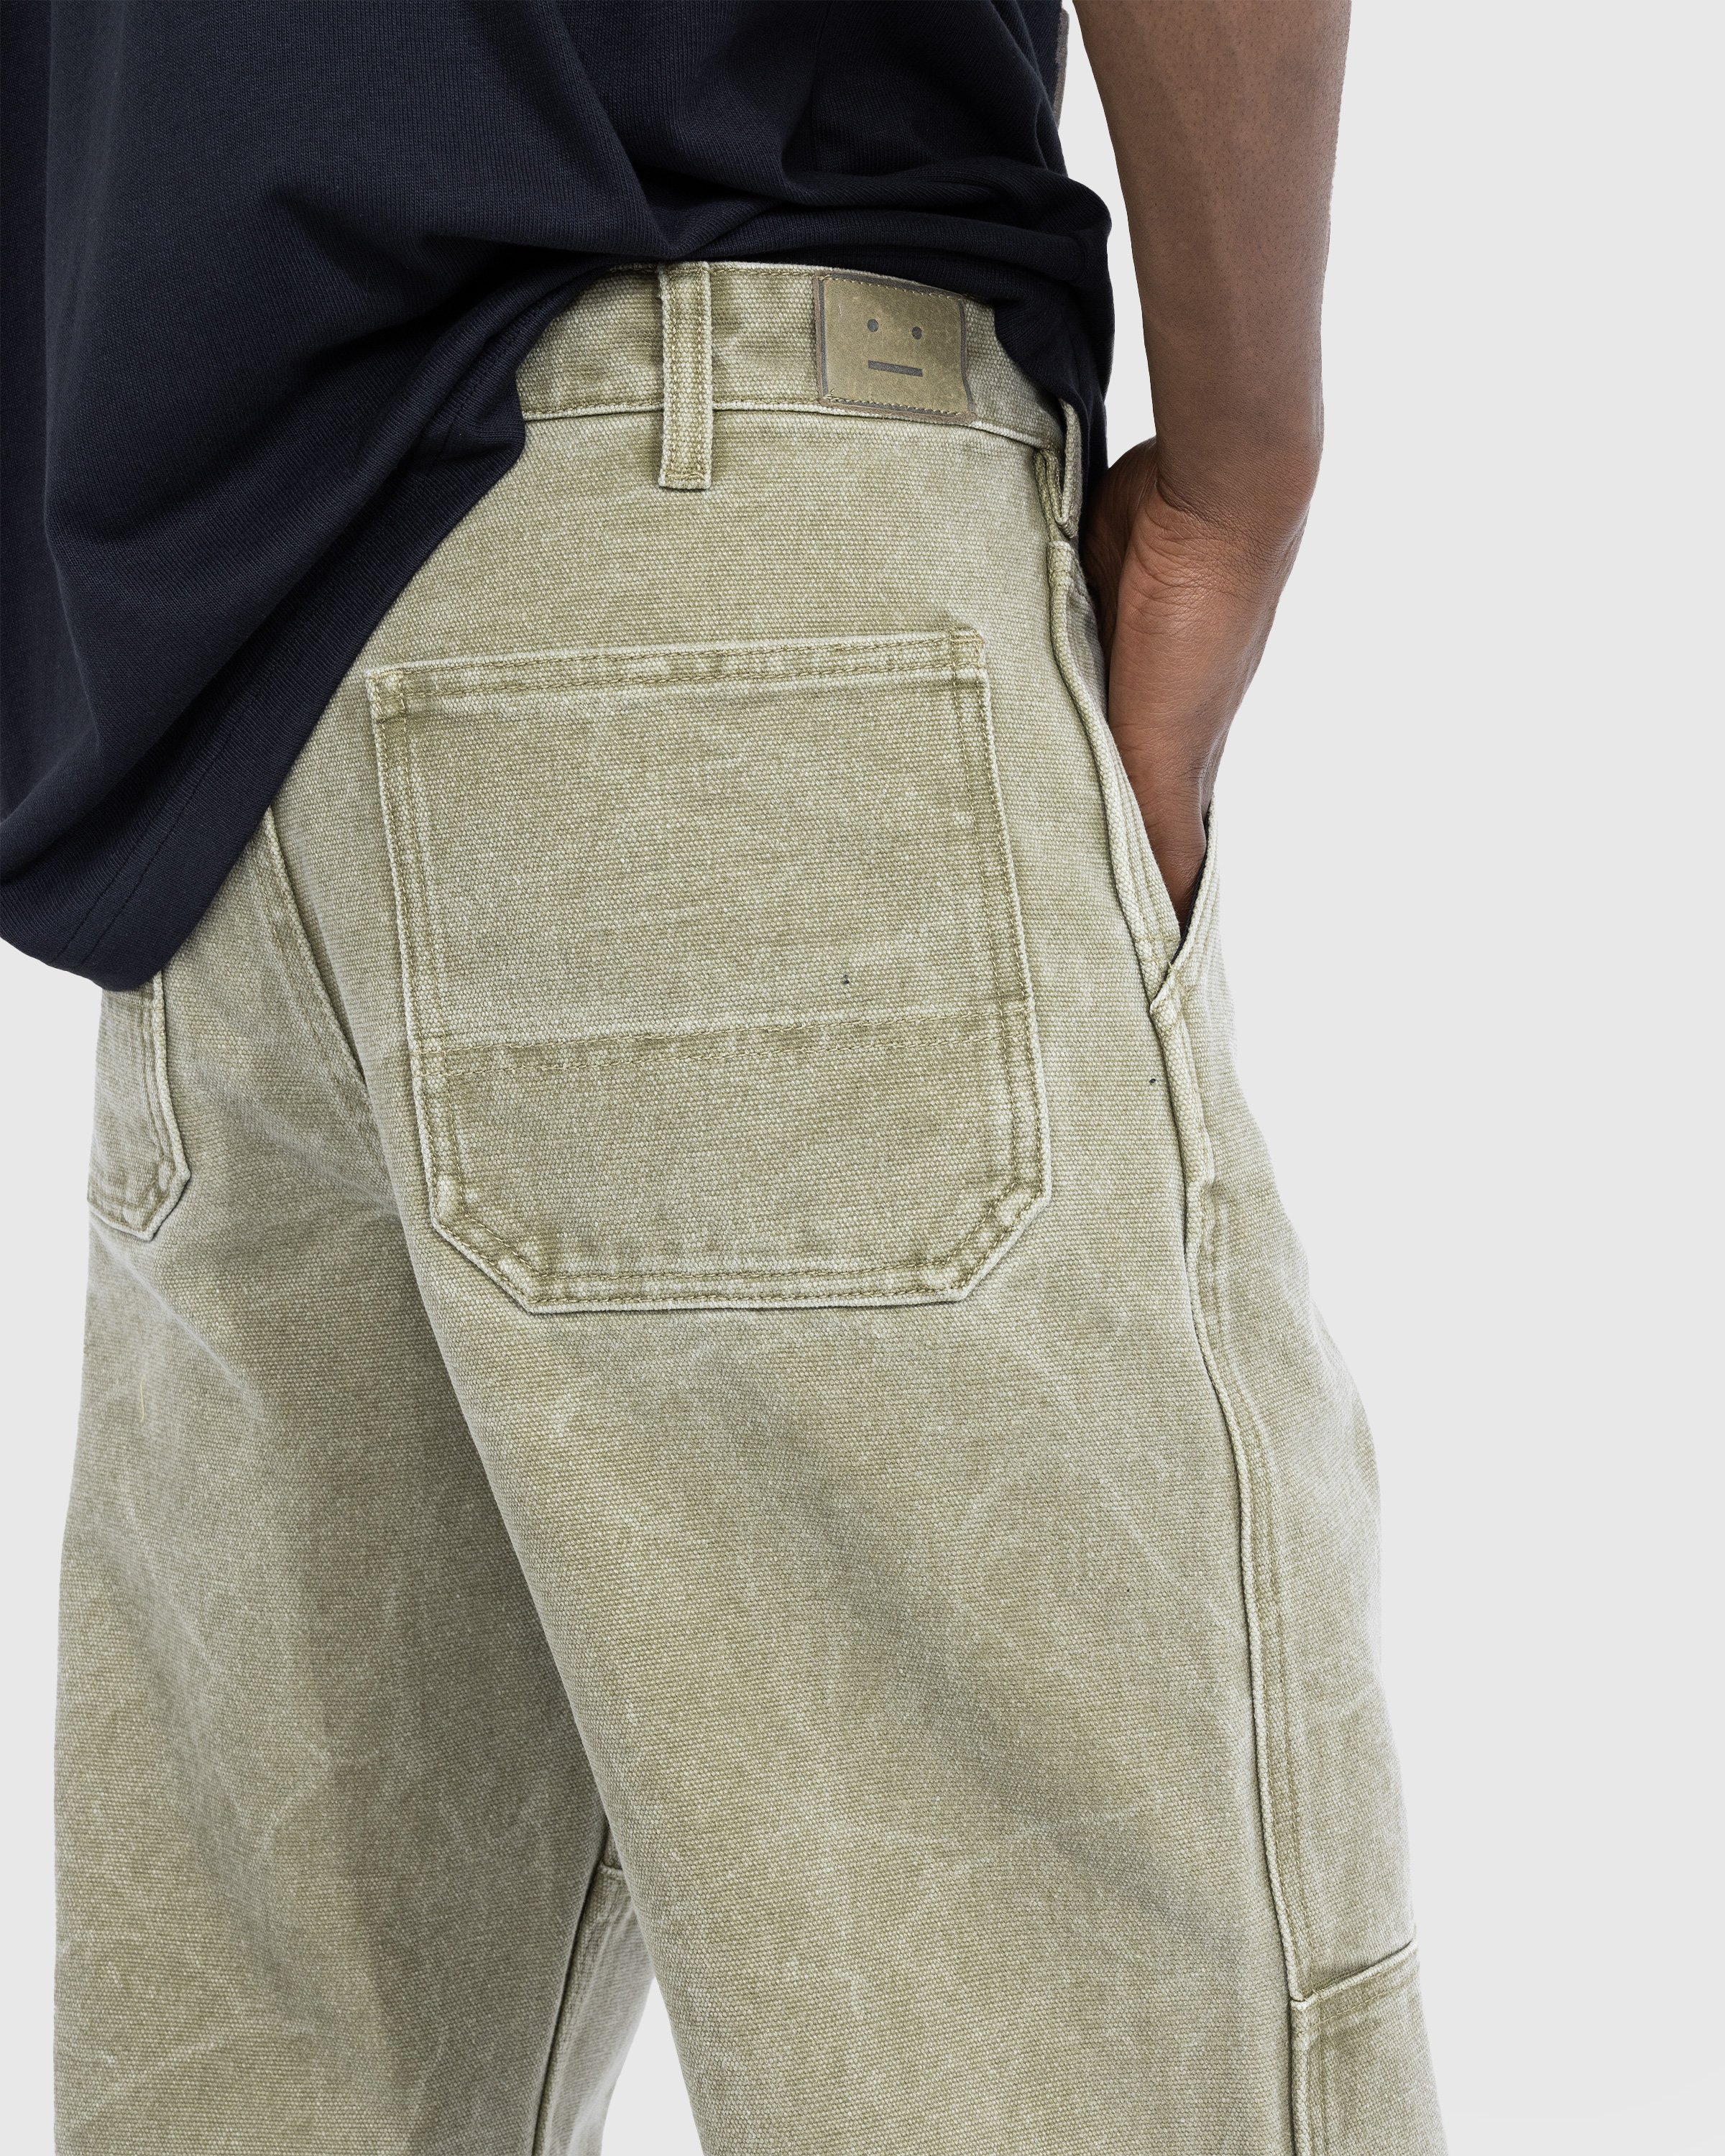 Acne Studios - Cotton Canvas Trousers Khaki Beige - Clothing - Green - Image 4